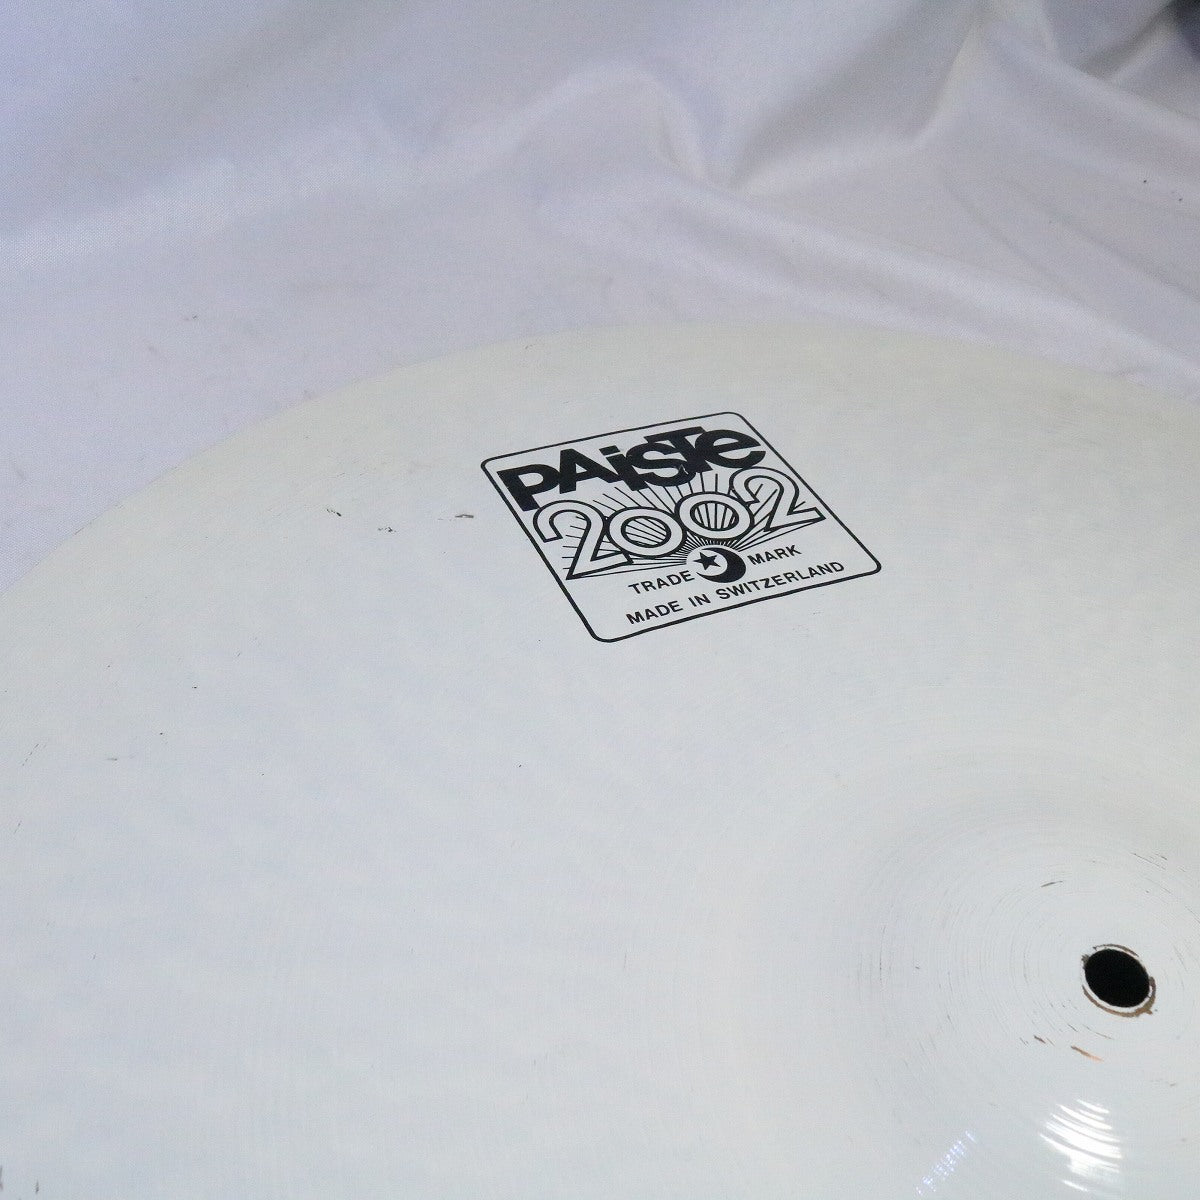 USED PAiSTe / 2002 22" Heavy Ride White Coat (custom spec) ride cymbal 3566g [08]